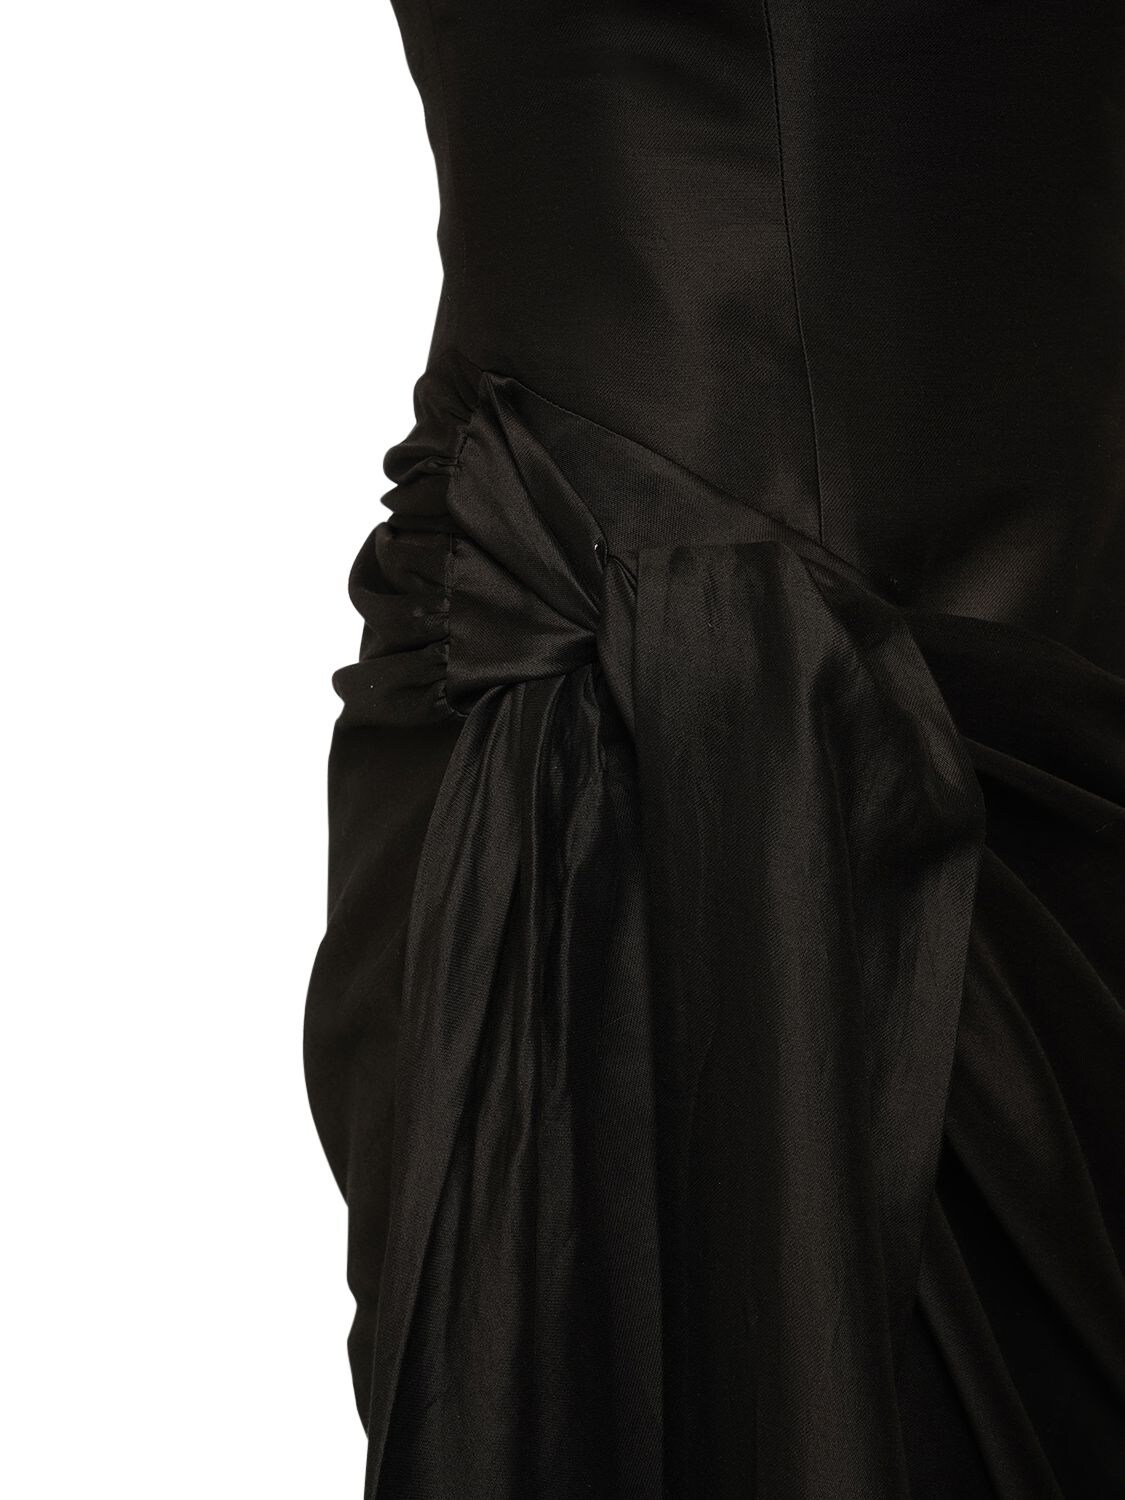 Rosie Assoulin Uniana Mikado Knot Midi Dress In Black | ModeSens